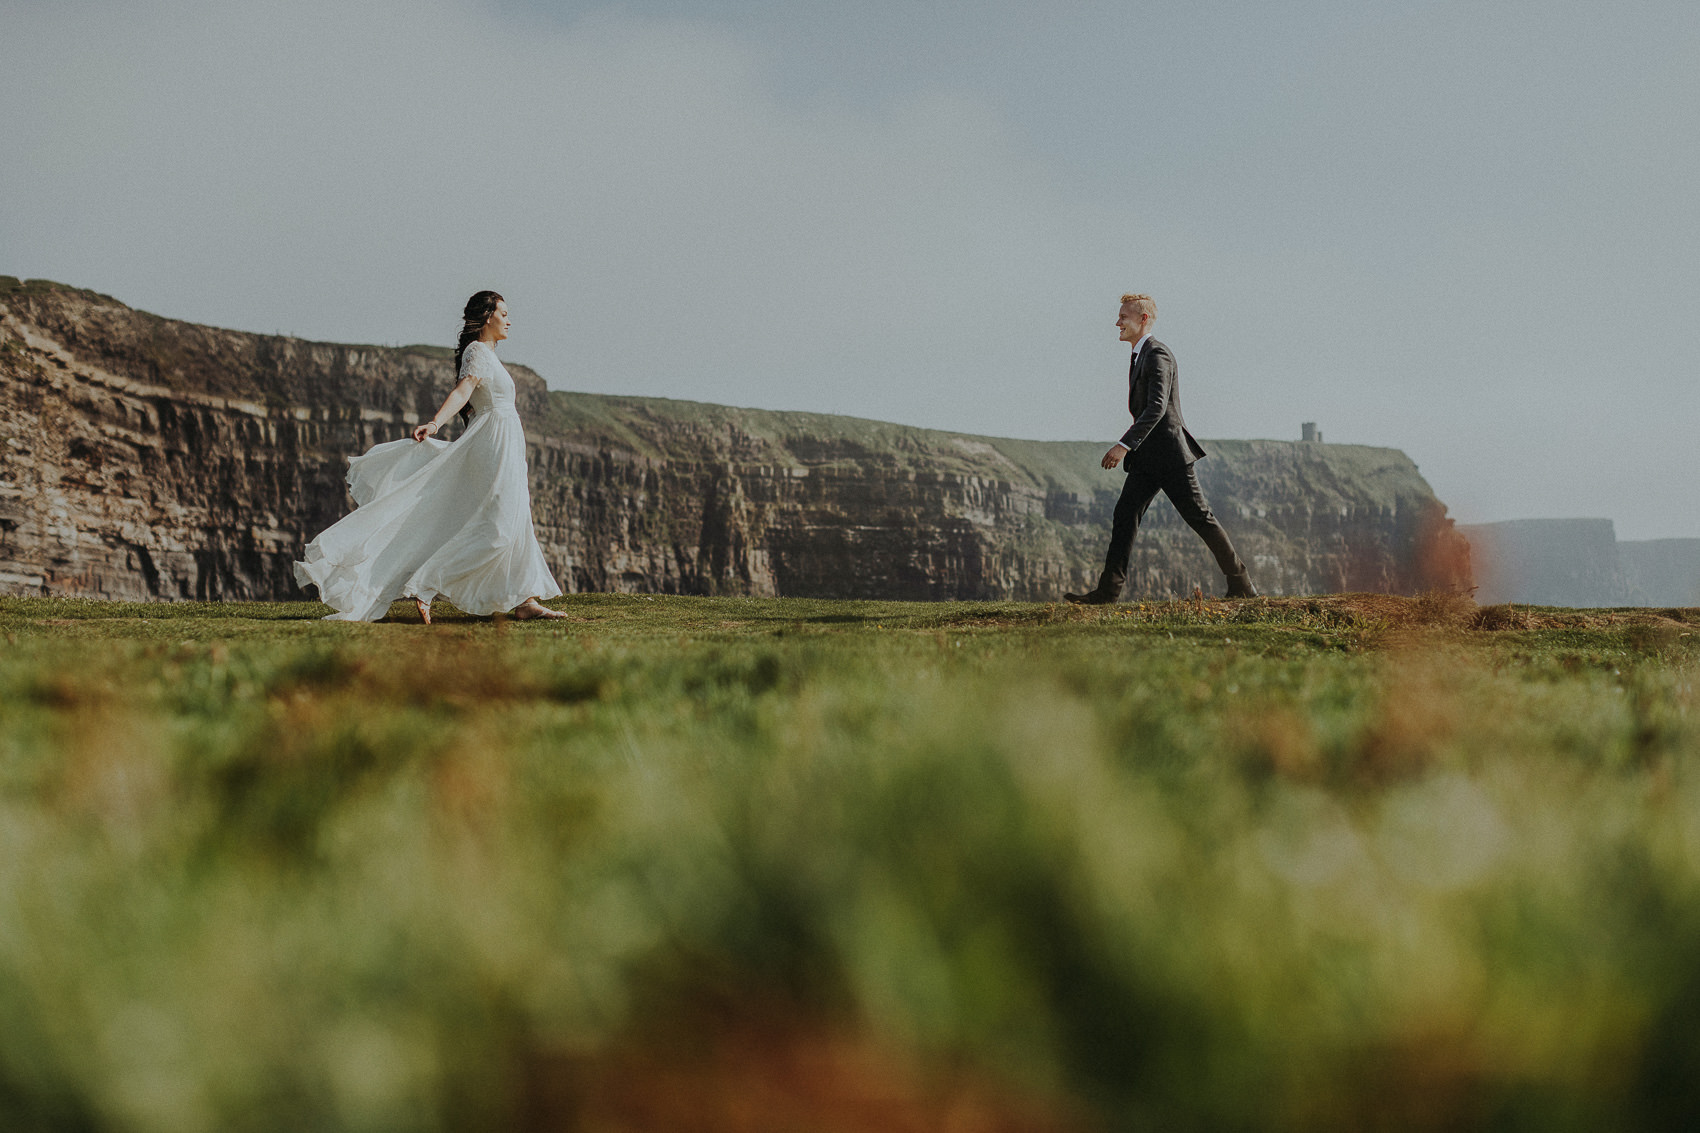 INSTGRM - Ireland based Documentary Wedding Photographer - Rafal Borek